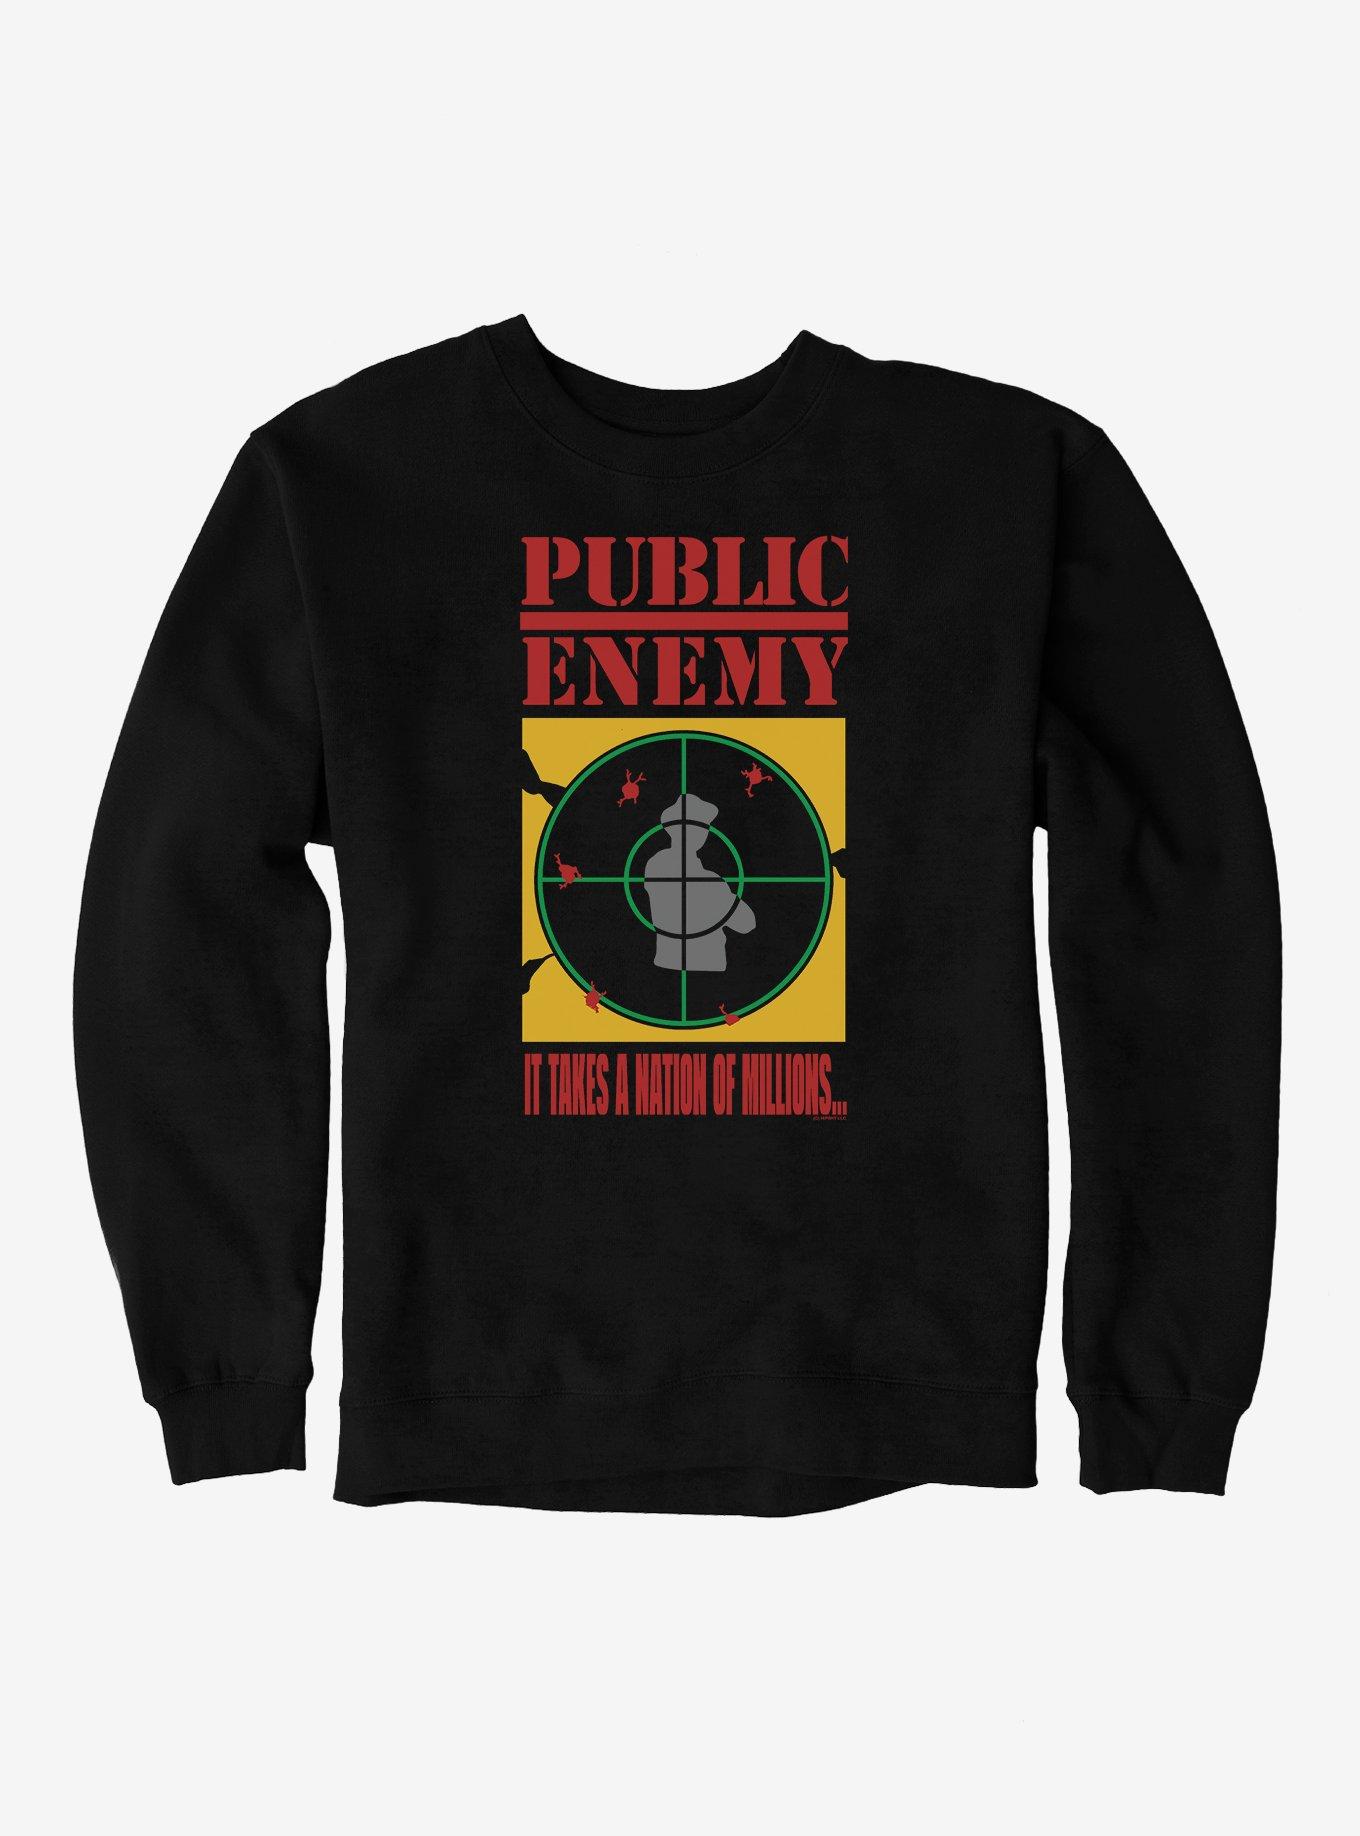 Public Enemy Takes A Nation Of Millions Sweatshirt